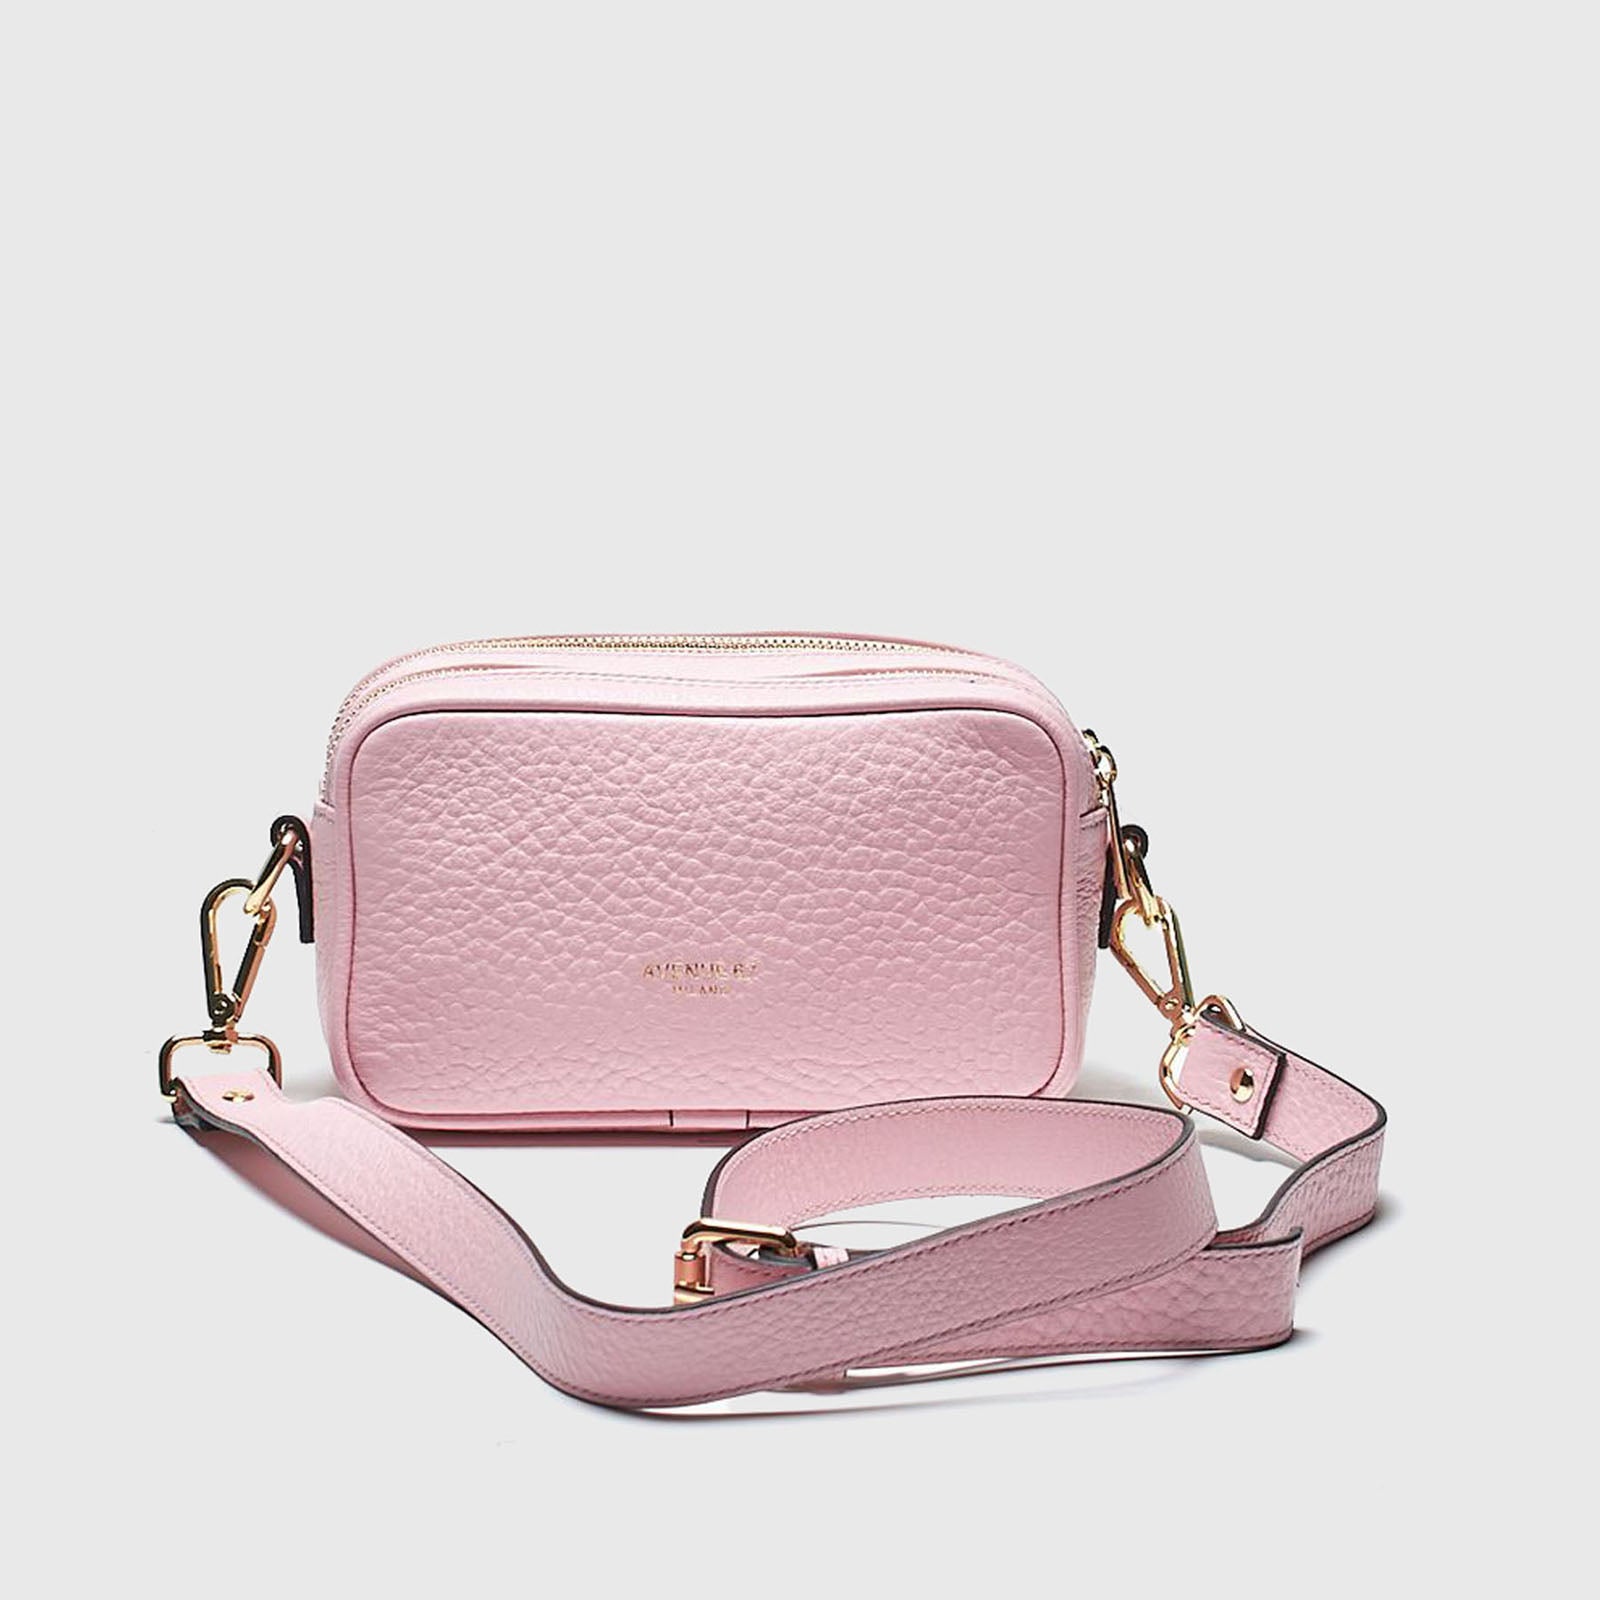 Avenue 67 Gabrielle Leather Bag Pink - 6